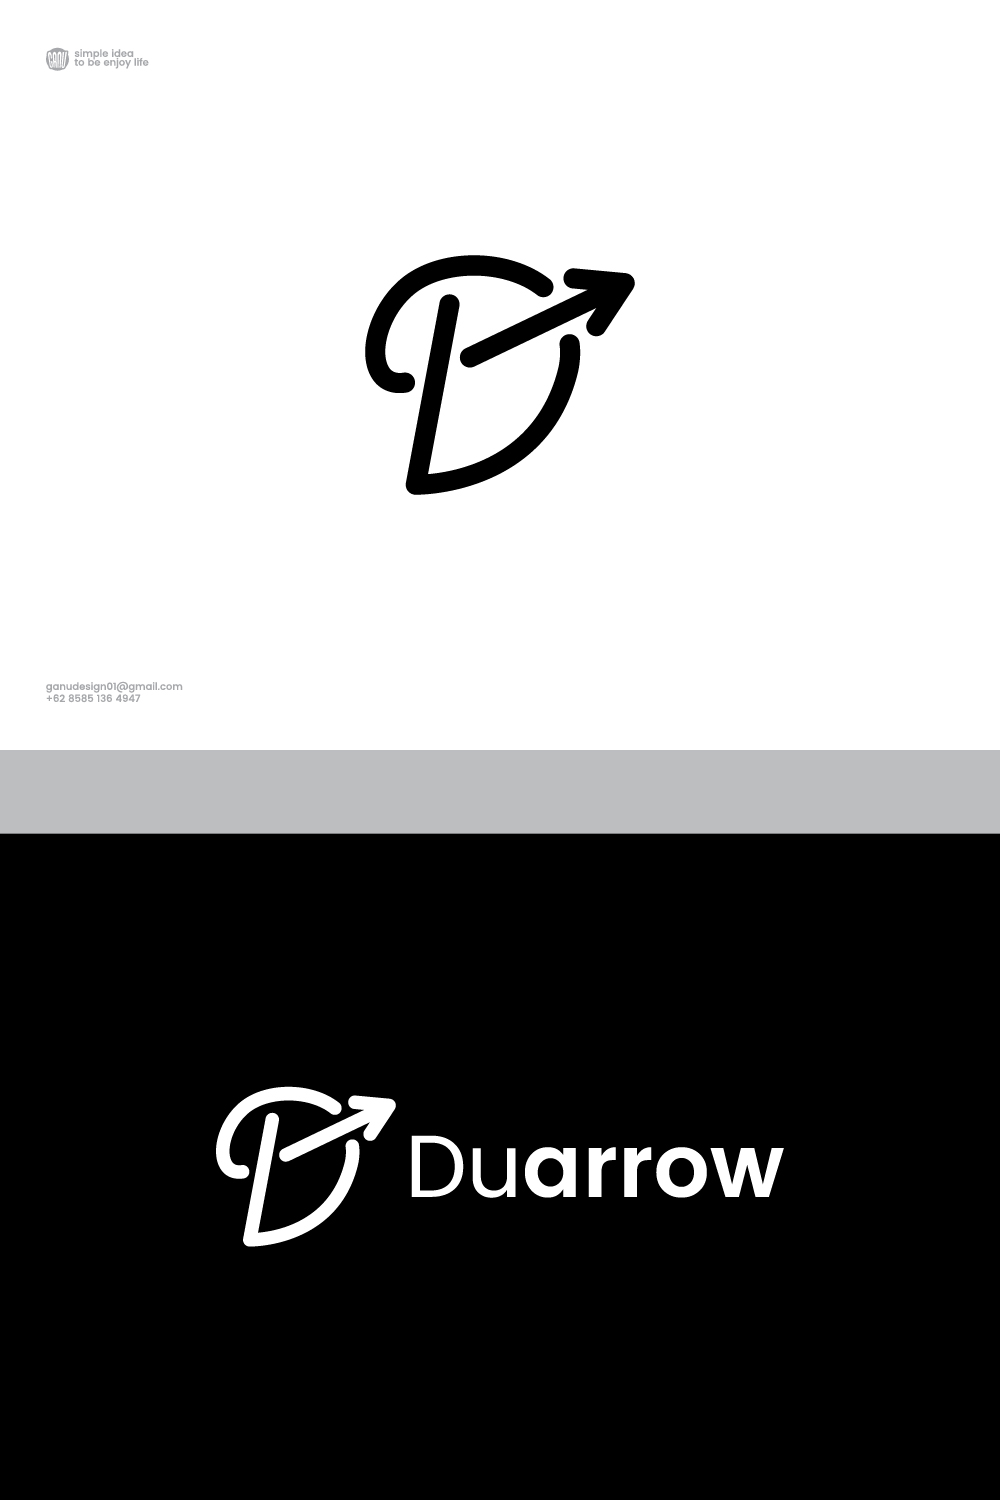 Letter D logo Arrow illustration pinterest preview image.